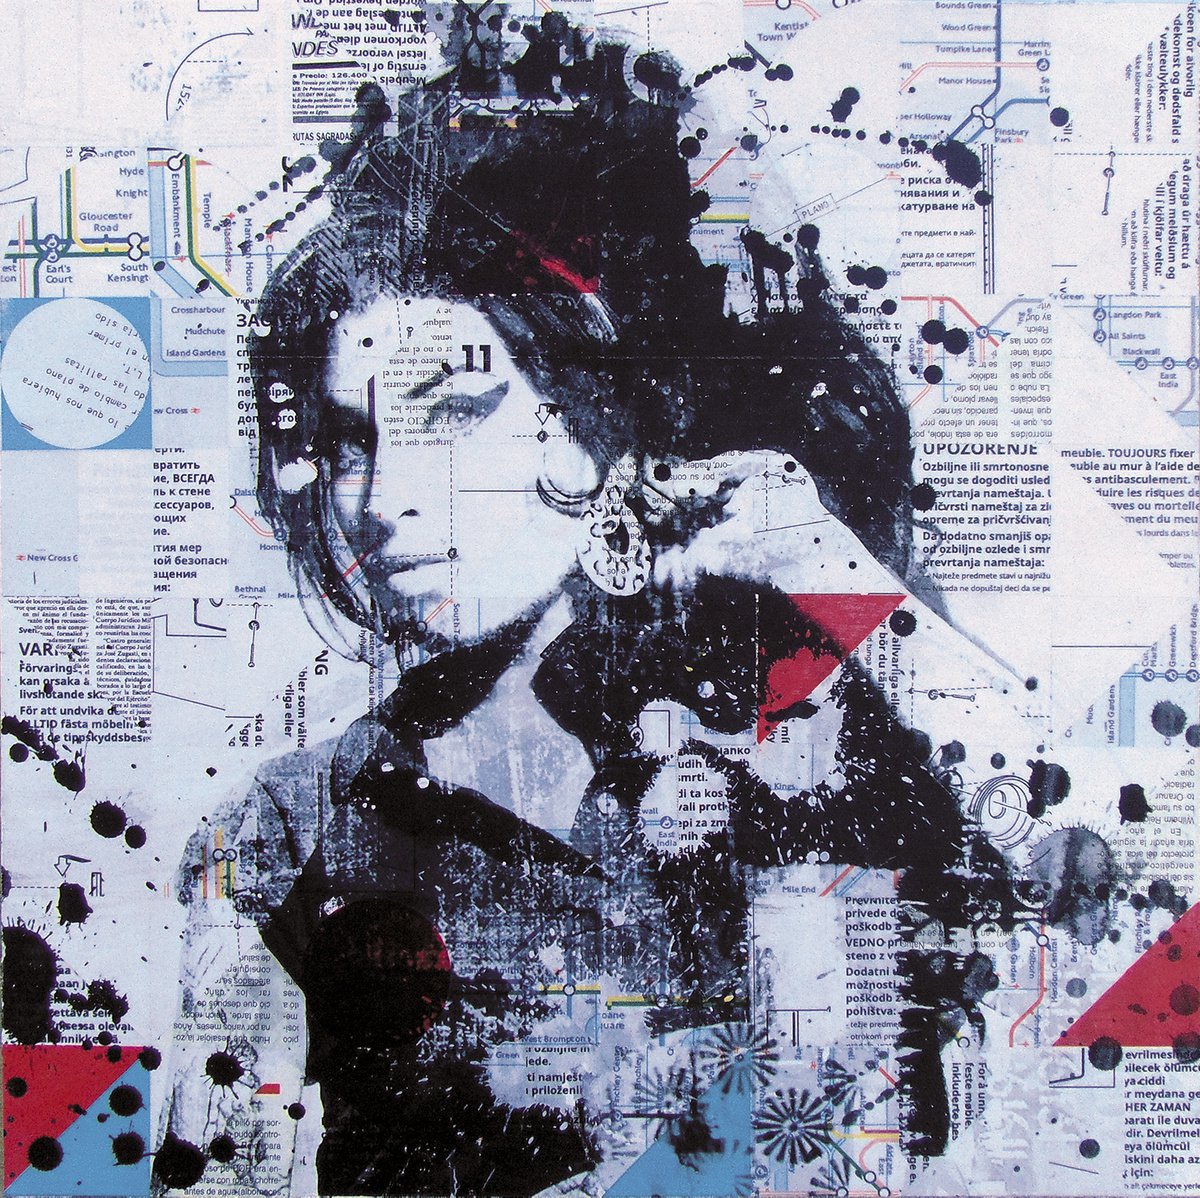 Collage_22_40x40 cm_Amy Winehouse by Manel Villalonga